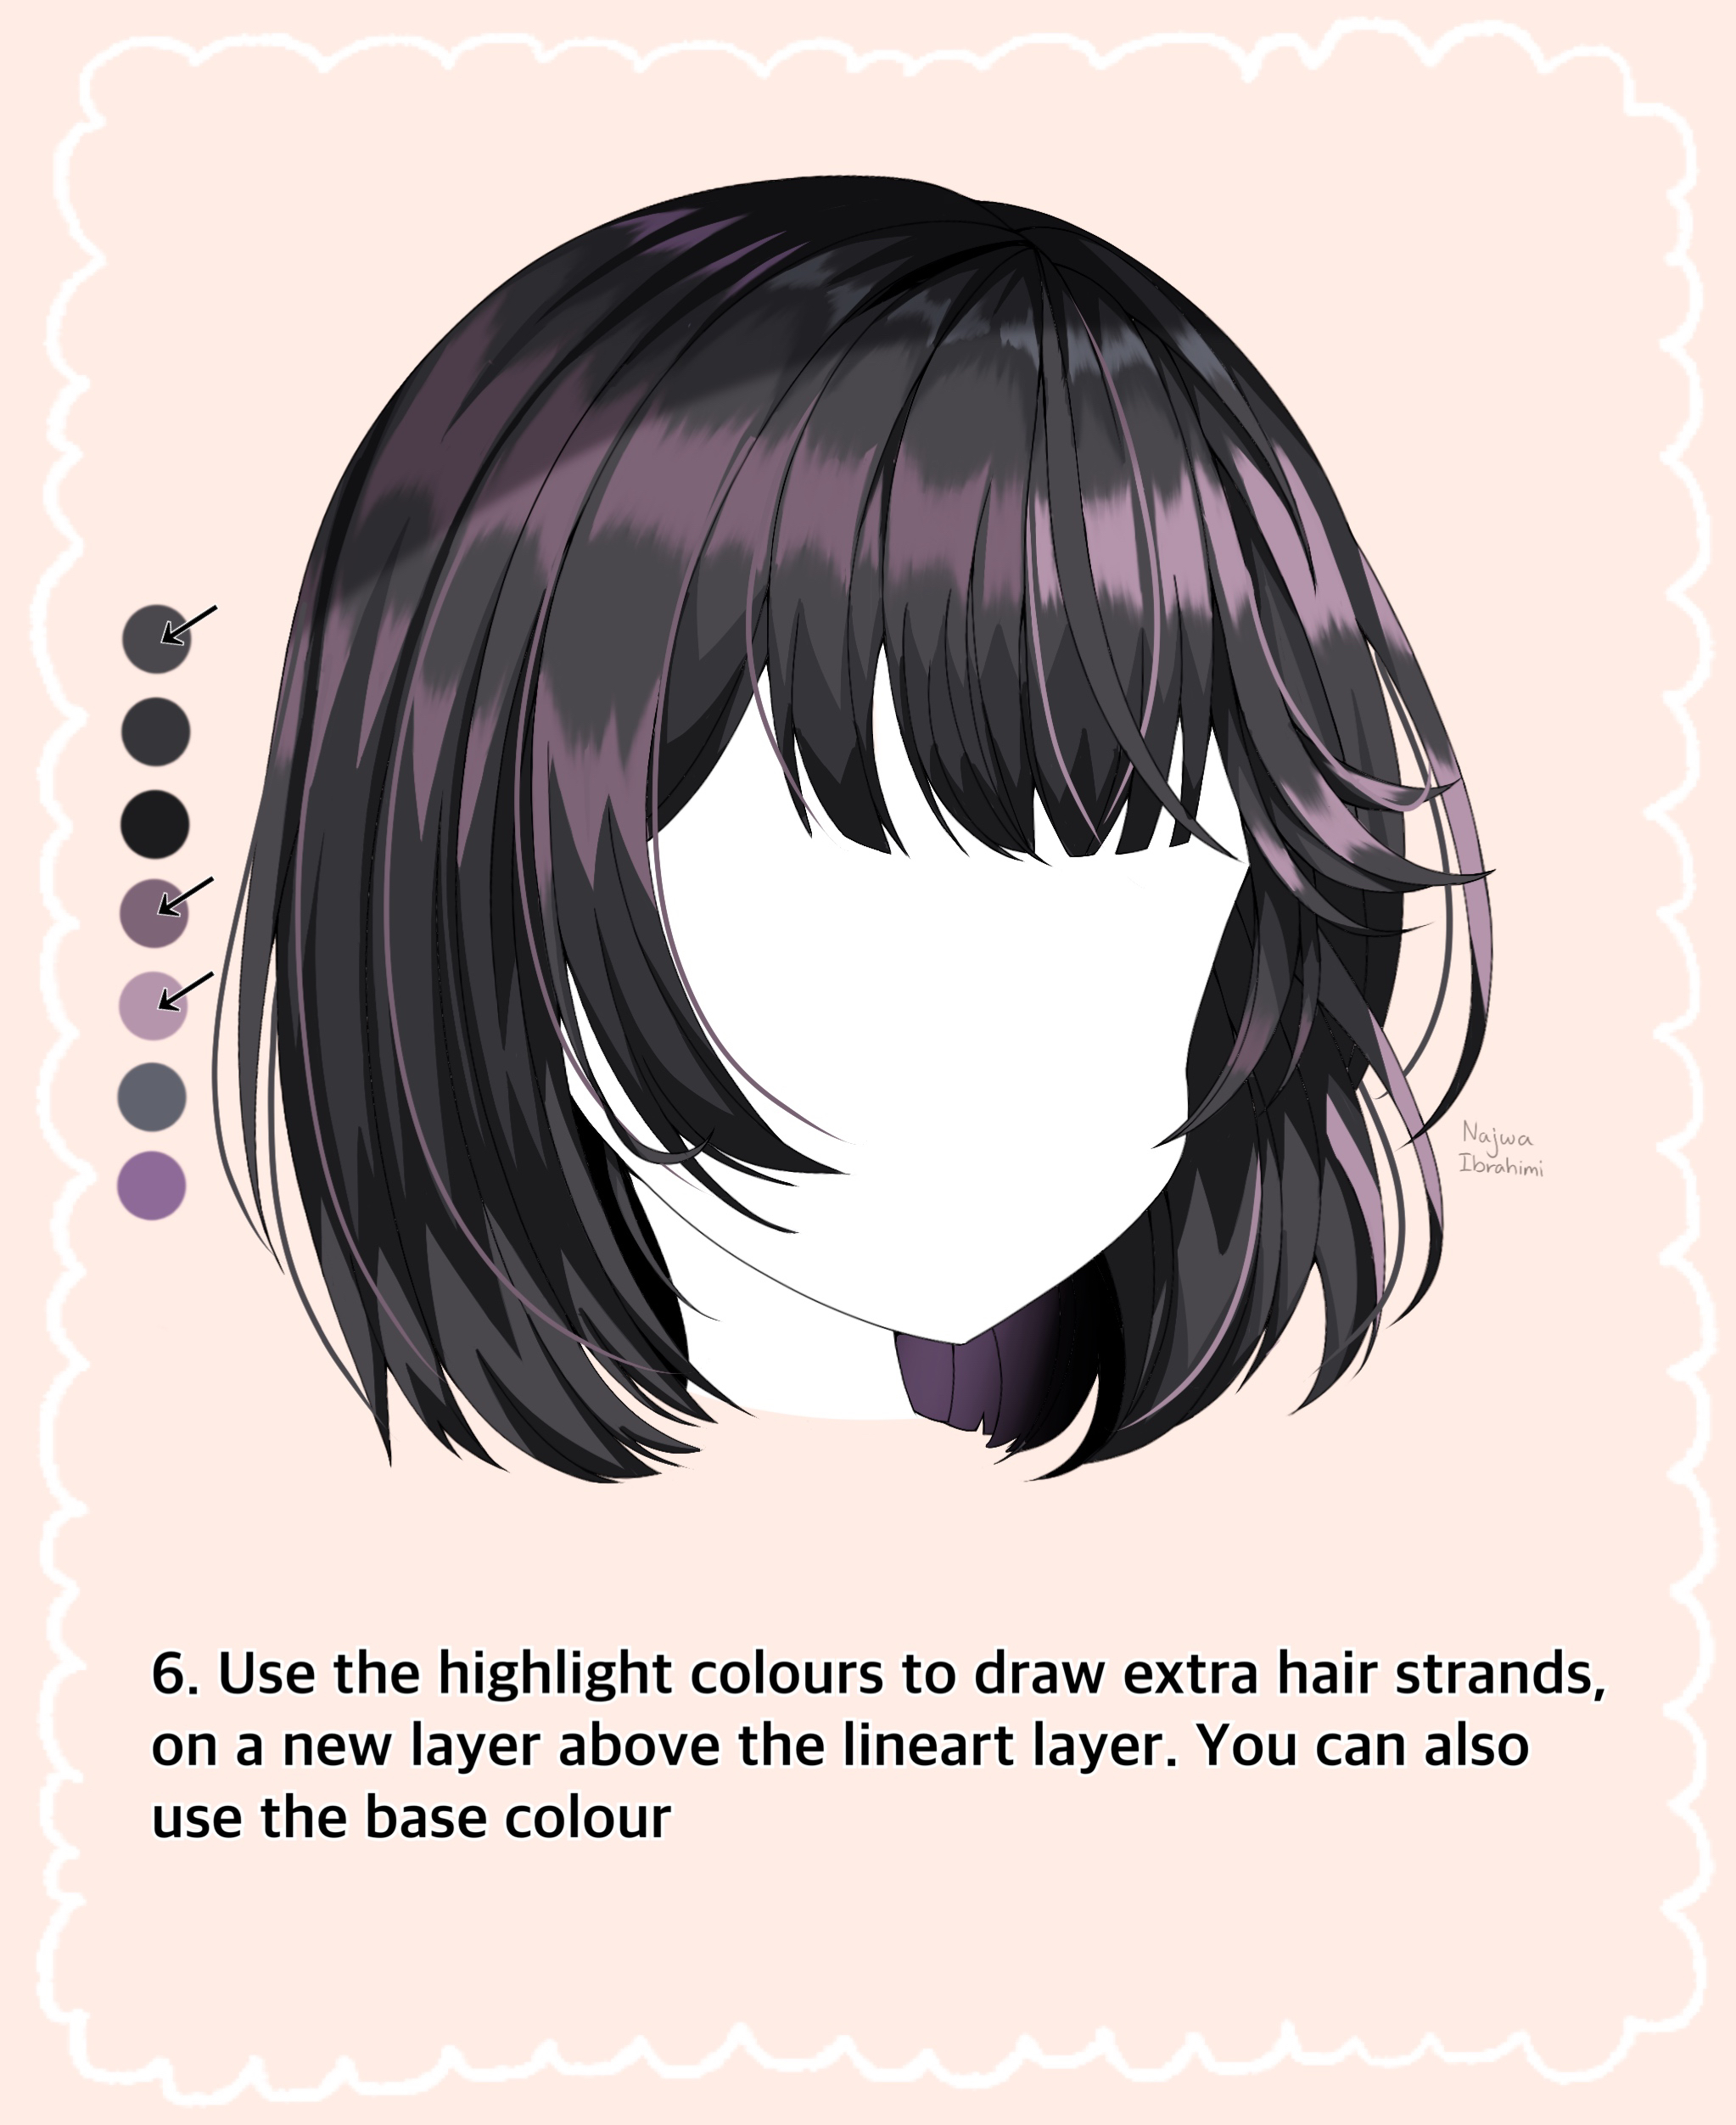 Black Anime Hair Tutorial